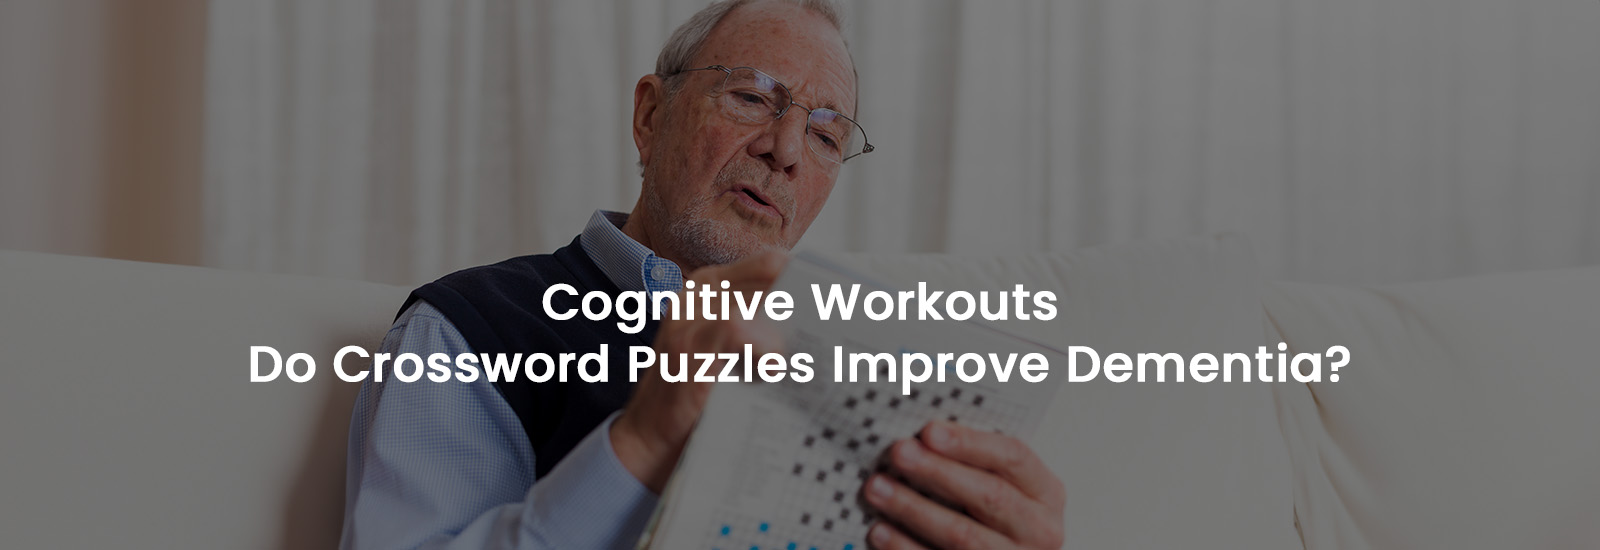 Cognitive Workouts Do Crossword Puzzles Shield Against Dementia? | Banner Image